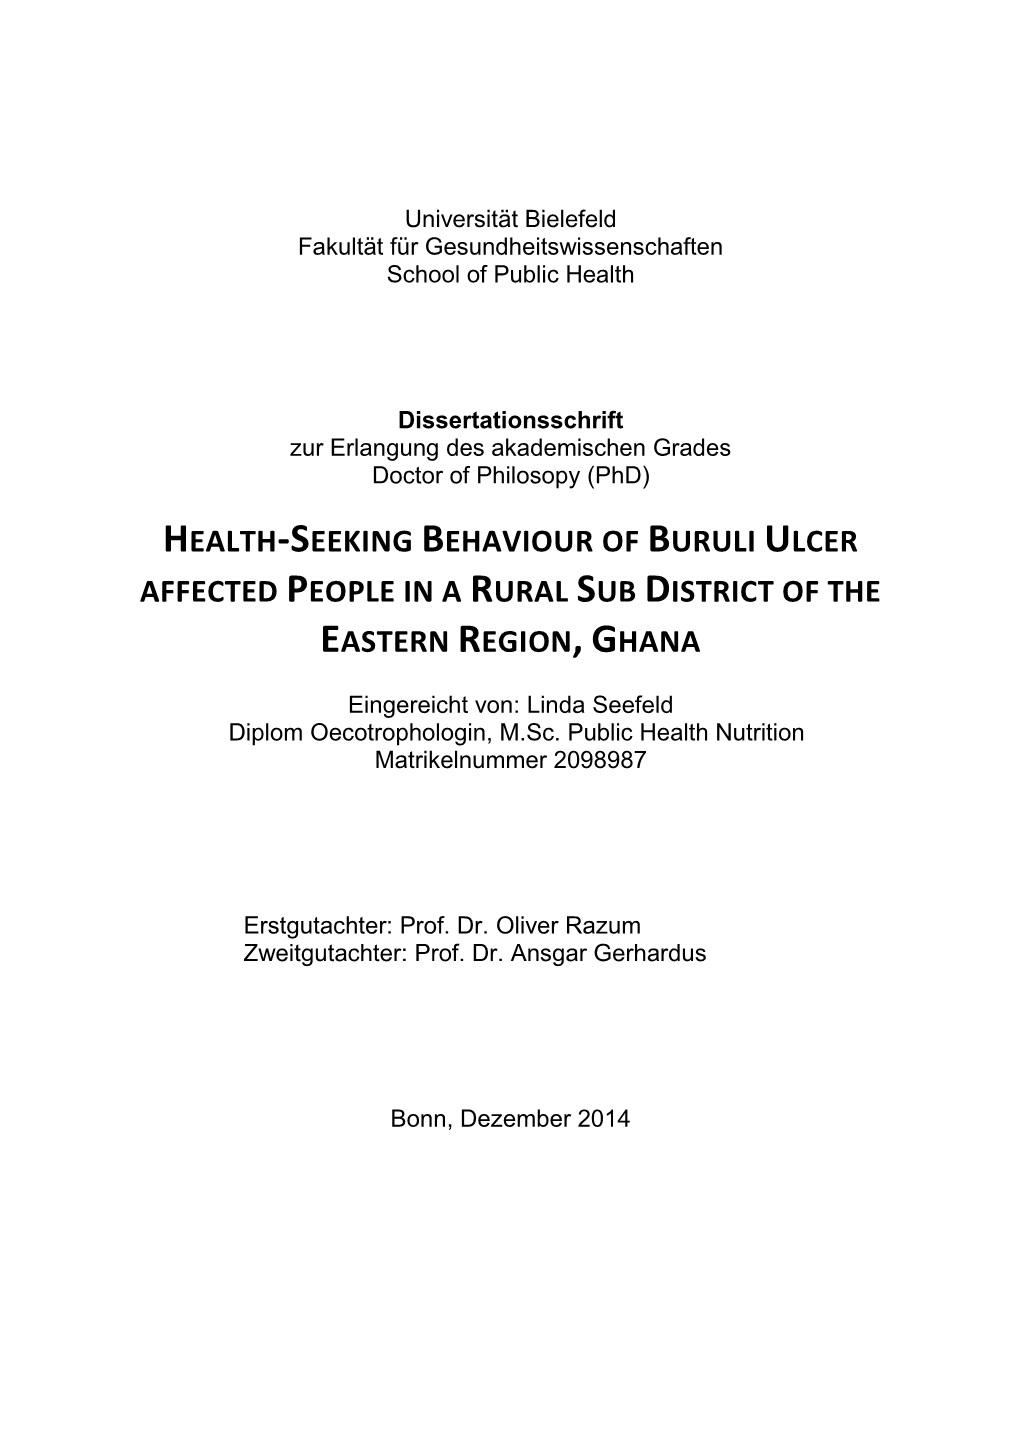 Health-Seeking Behaviour of Buruli Ulcer Affected People in a Rural Sub District of the Eastern Region, Ghana